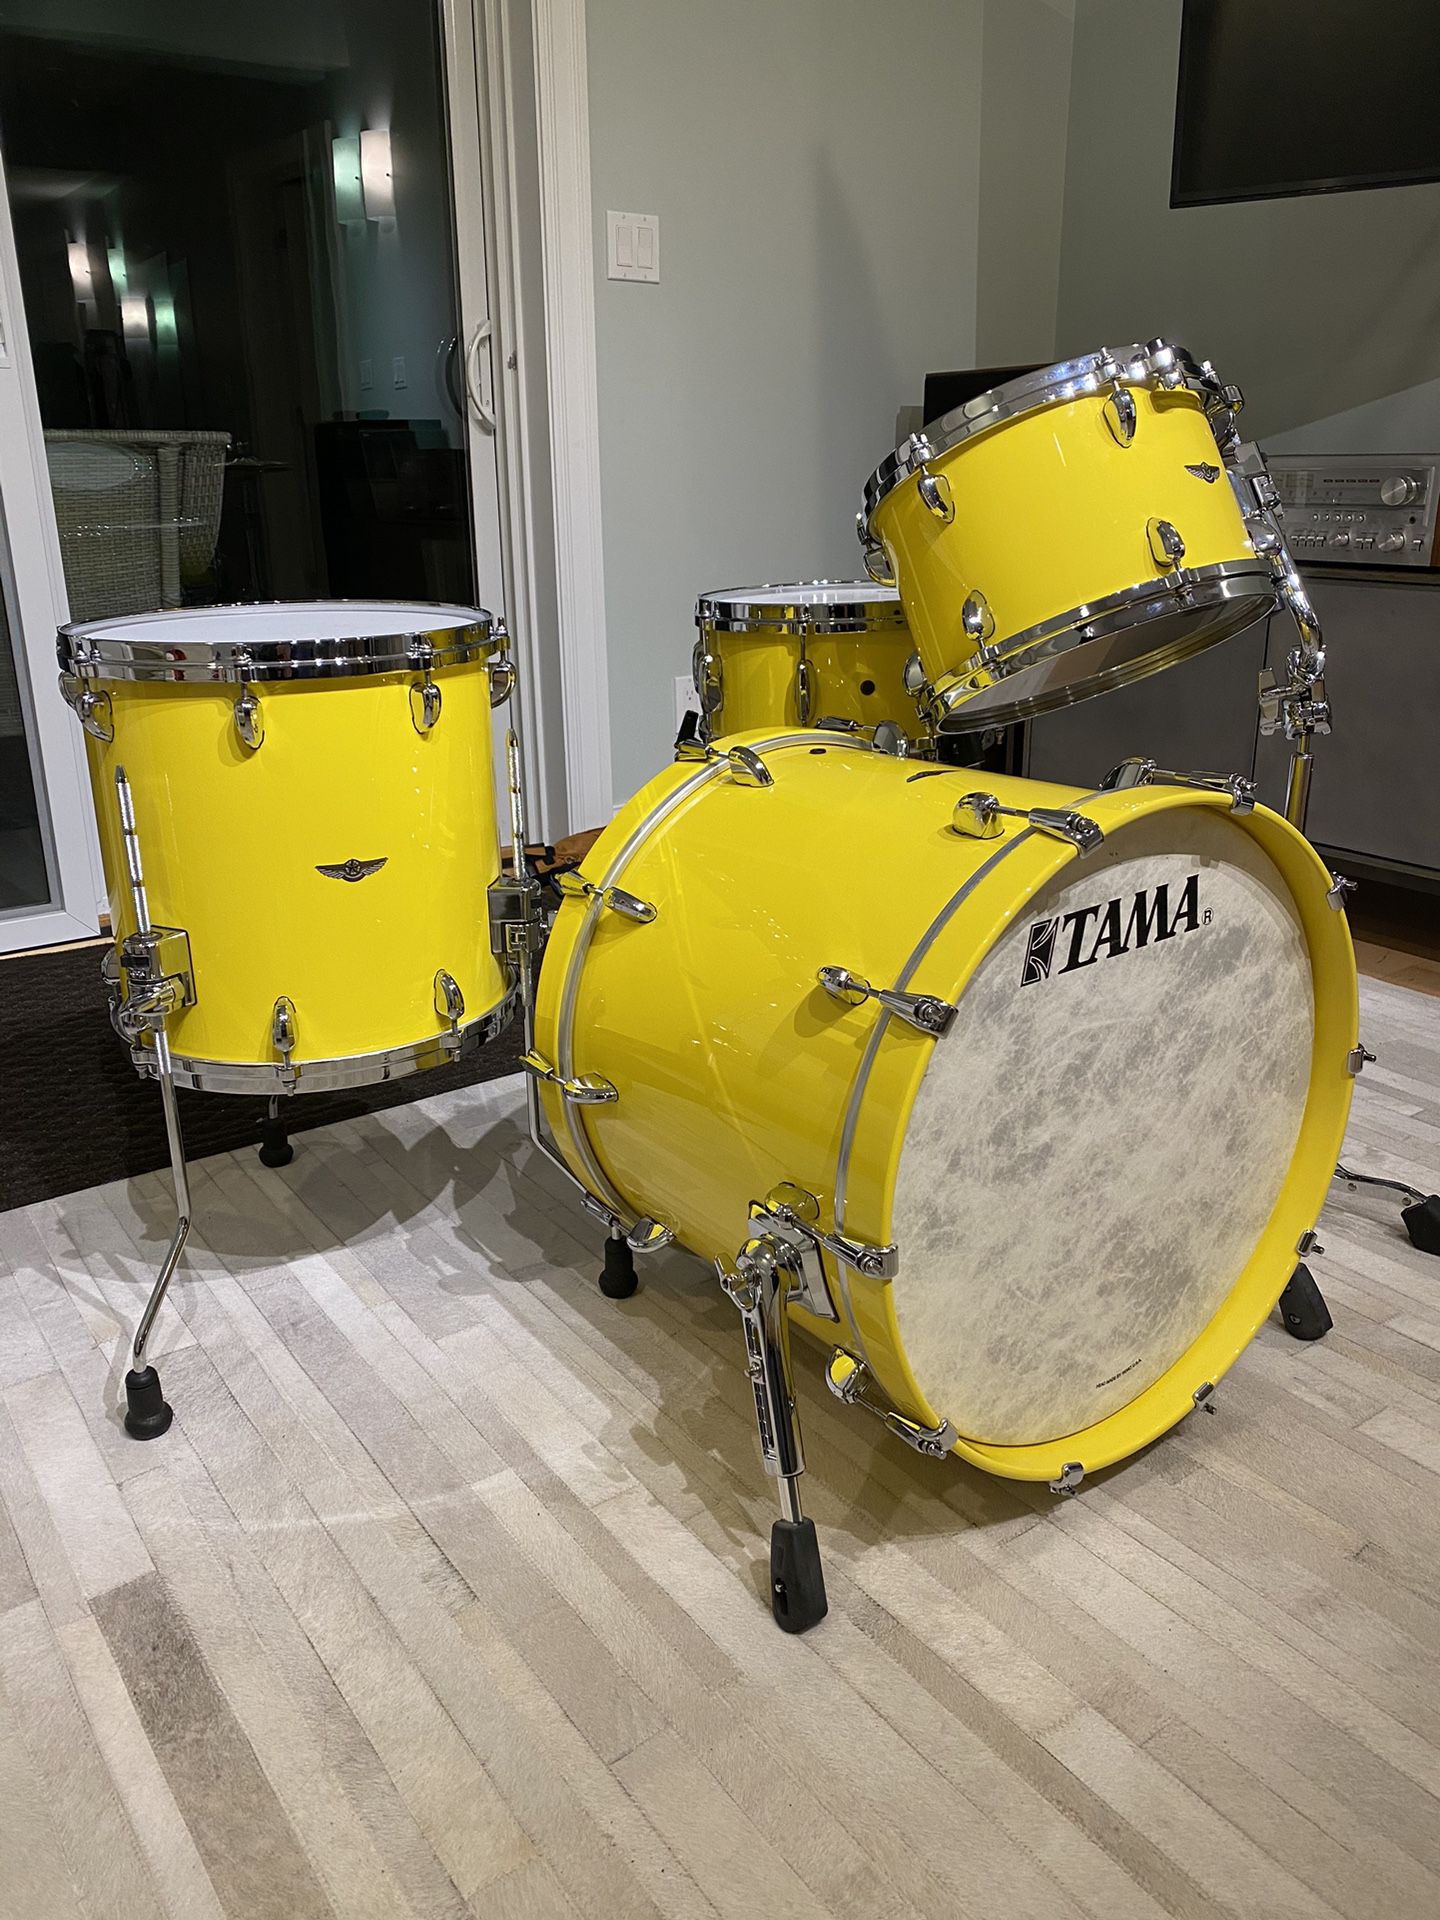 3 Drum Kits Sold Separately 